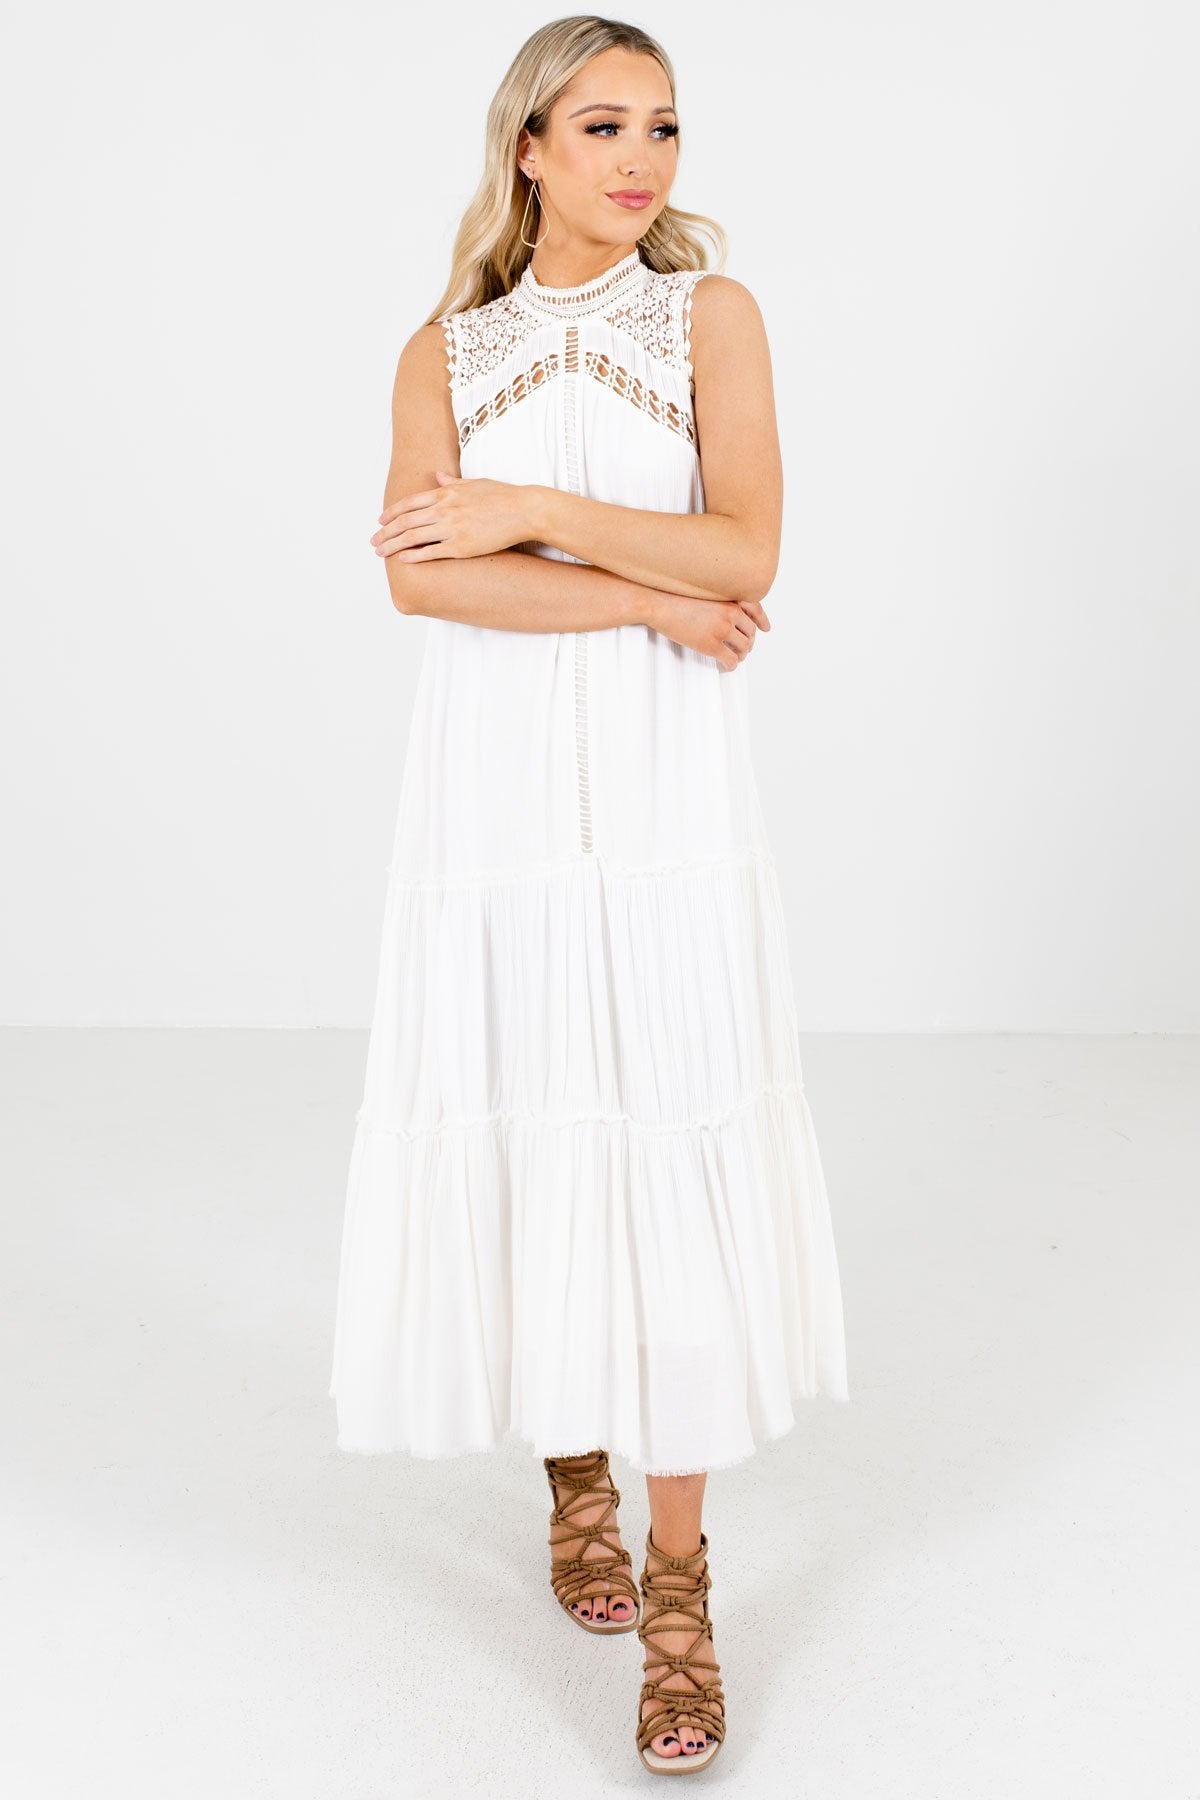 Women's White Flowy Silhouette Boutique Maxi Dress